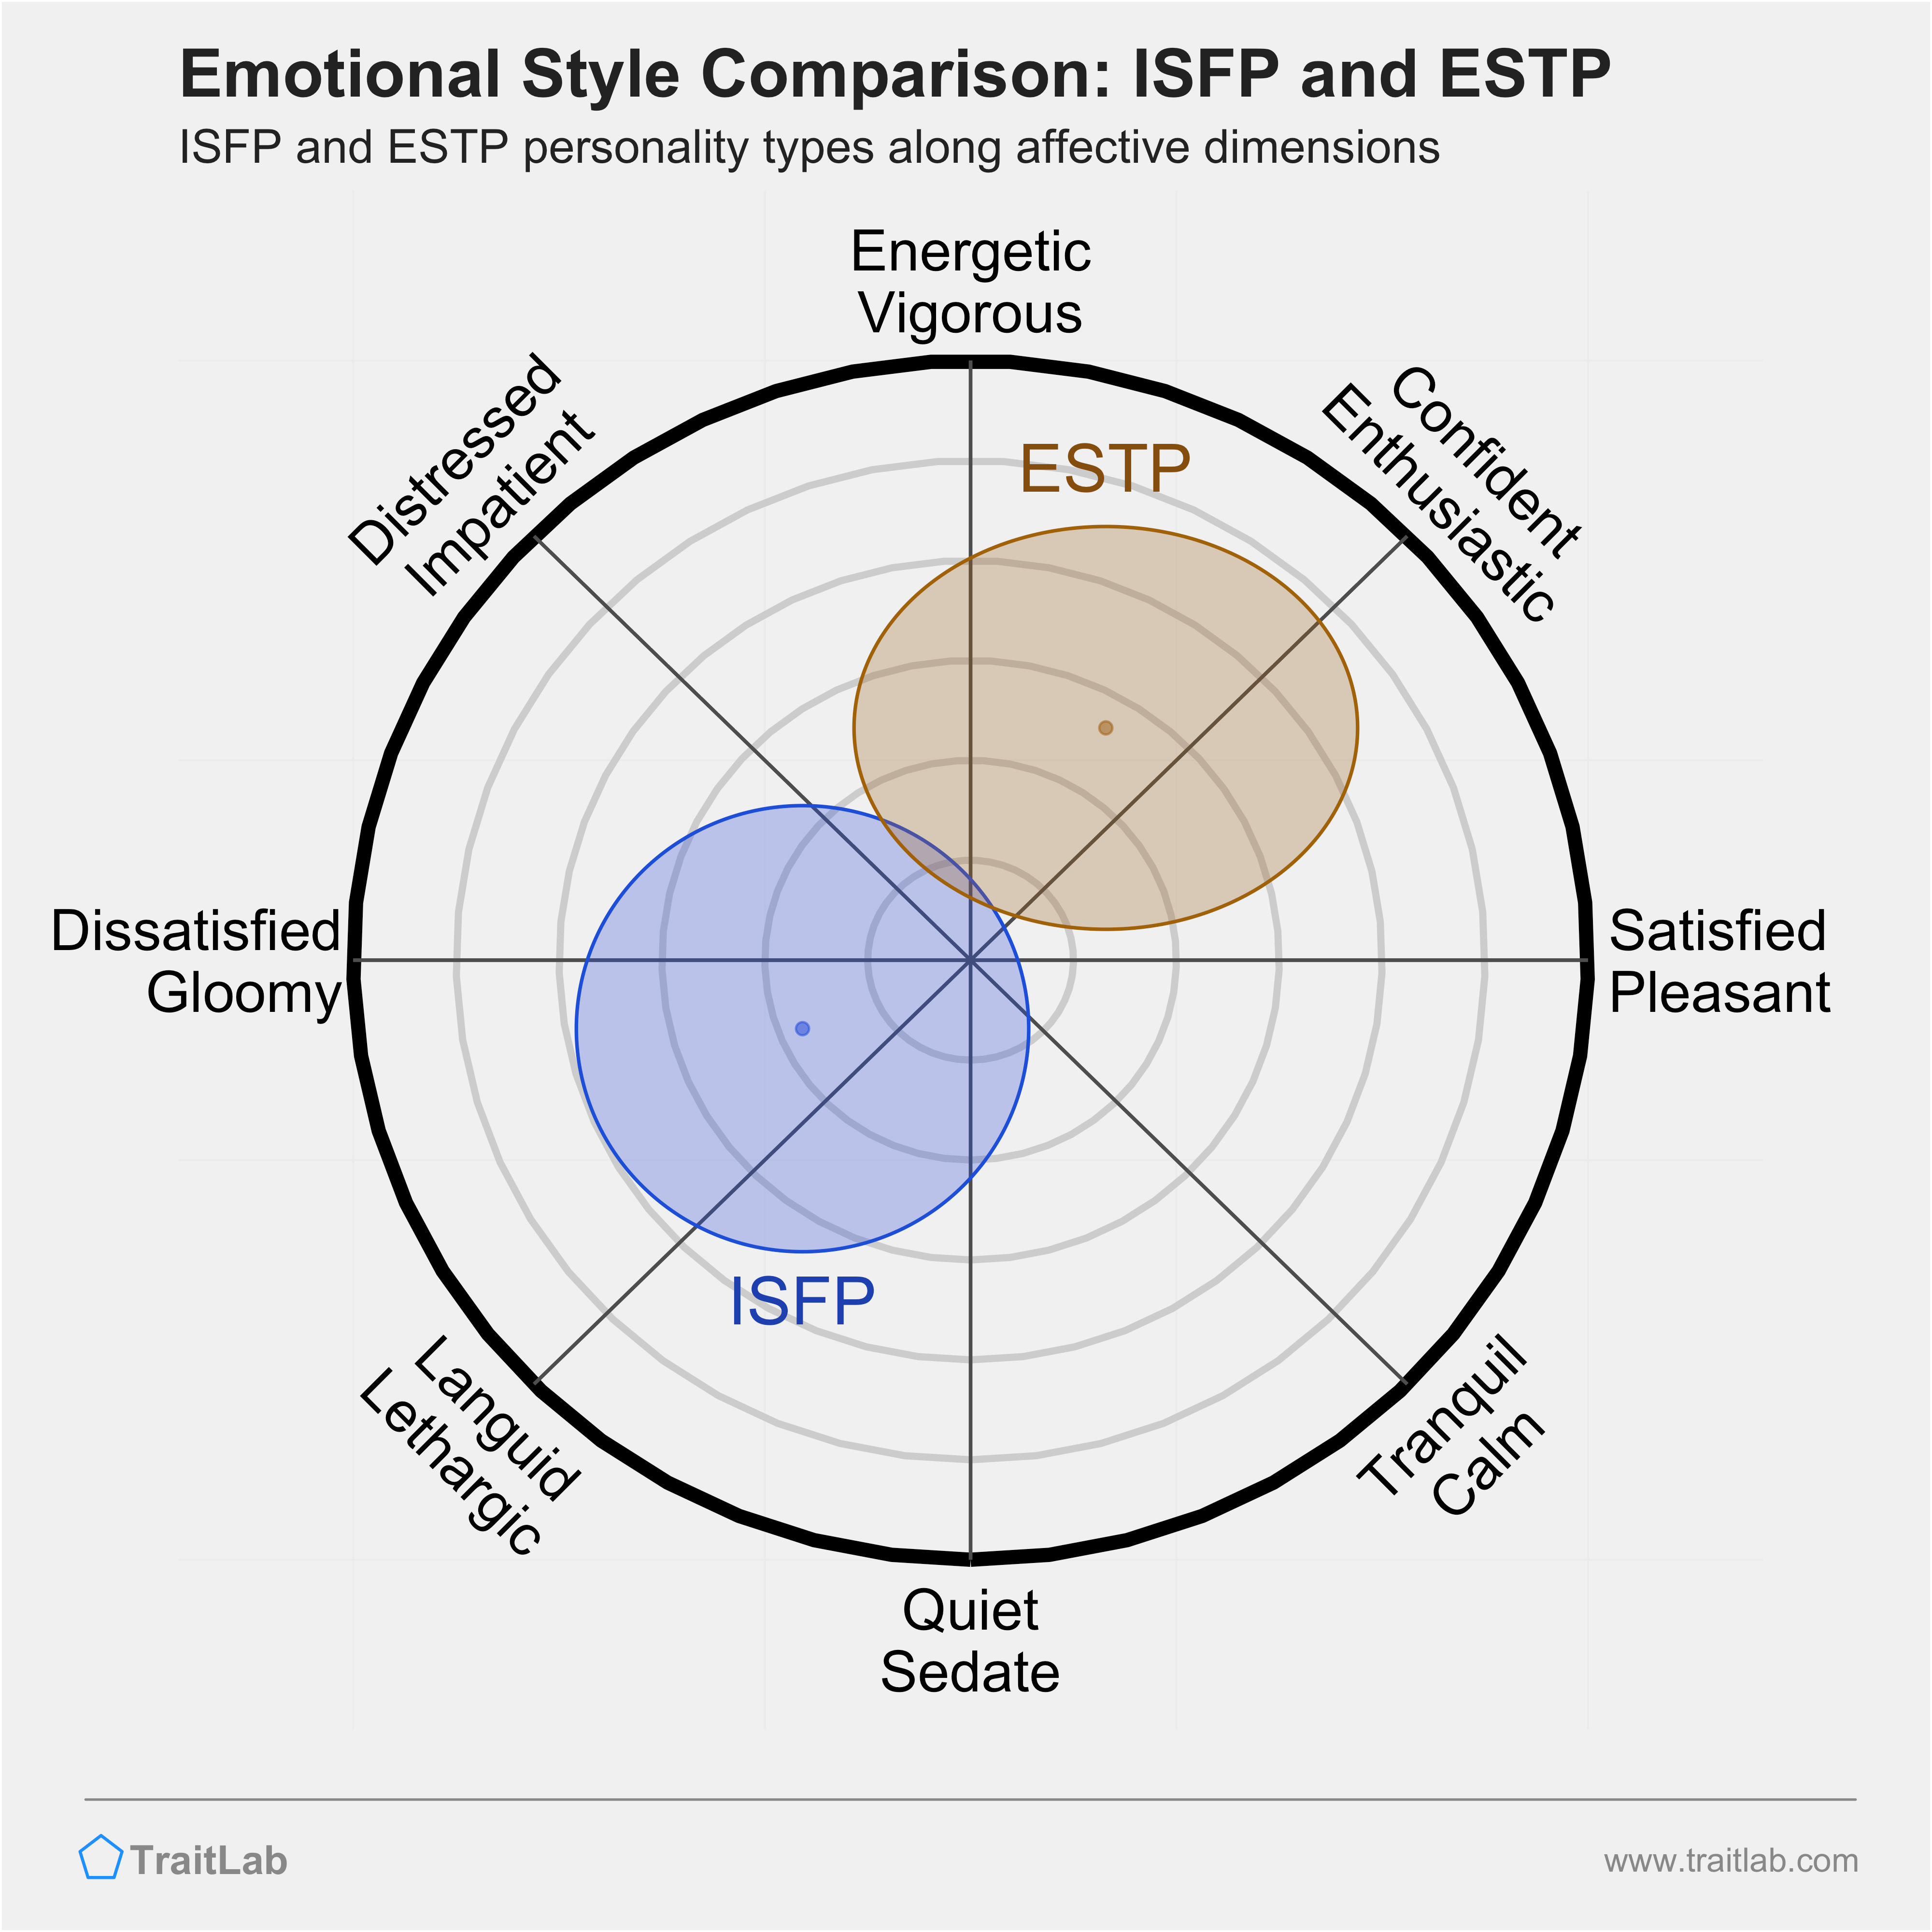 ISFP and ESTP comparison across emotional (affective) dimensions